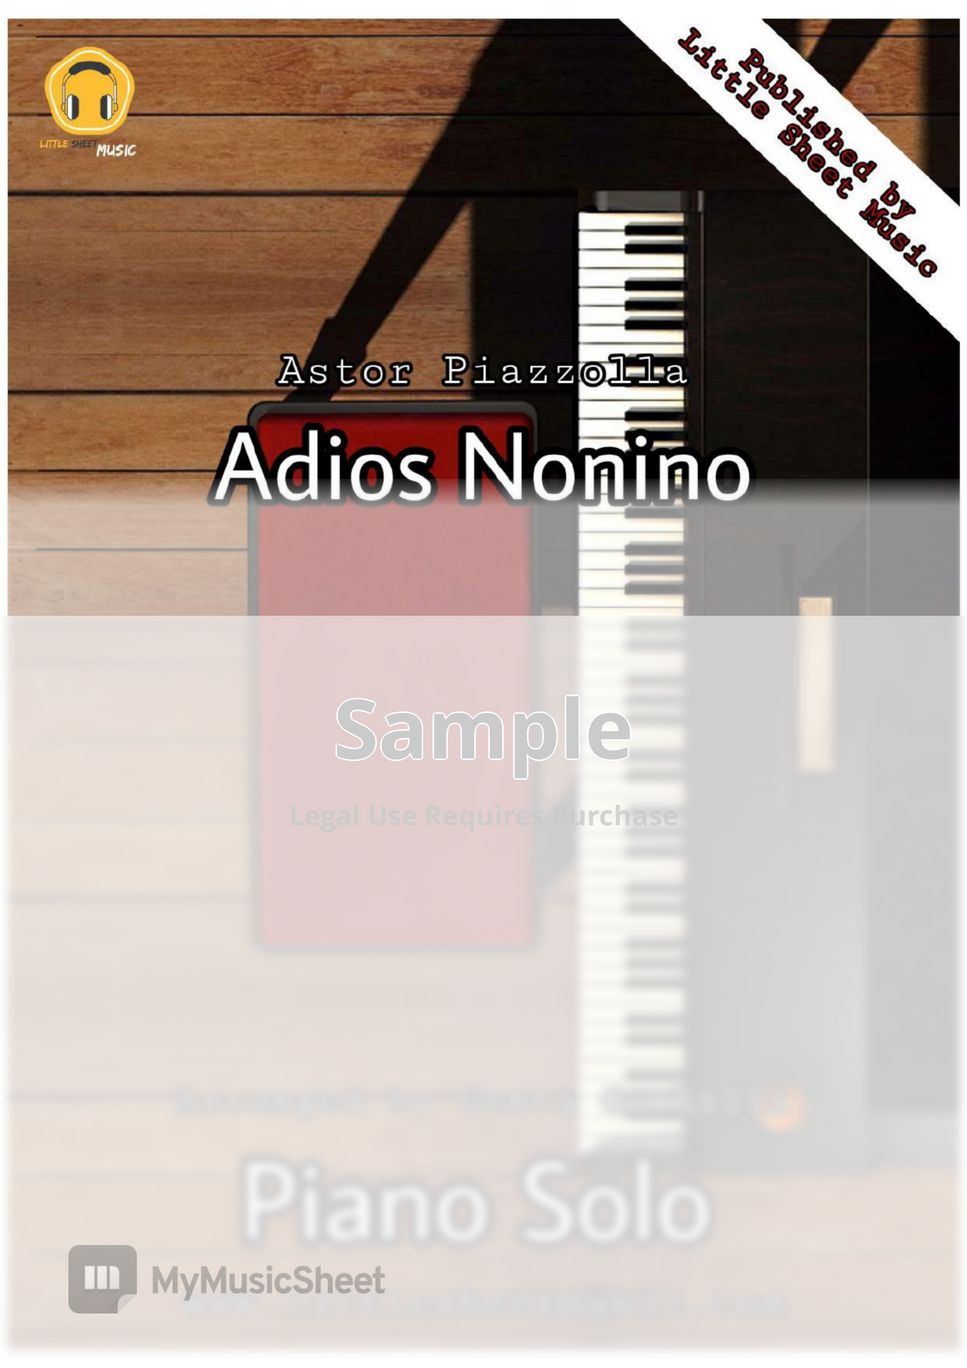 Astor Piazzolla - Adios Nonino by Genti Guxholli